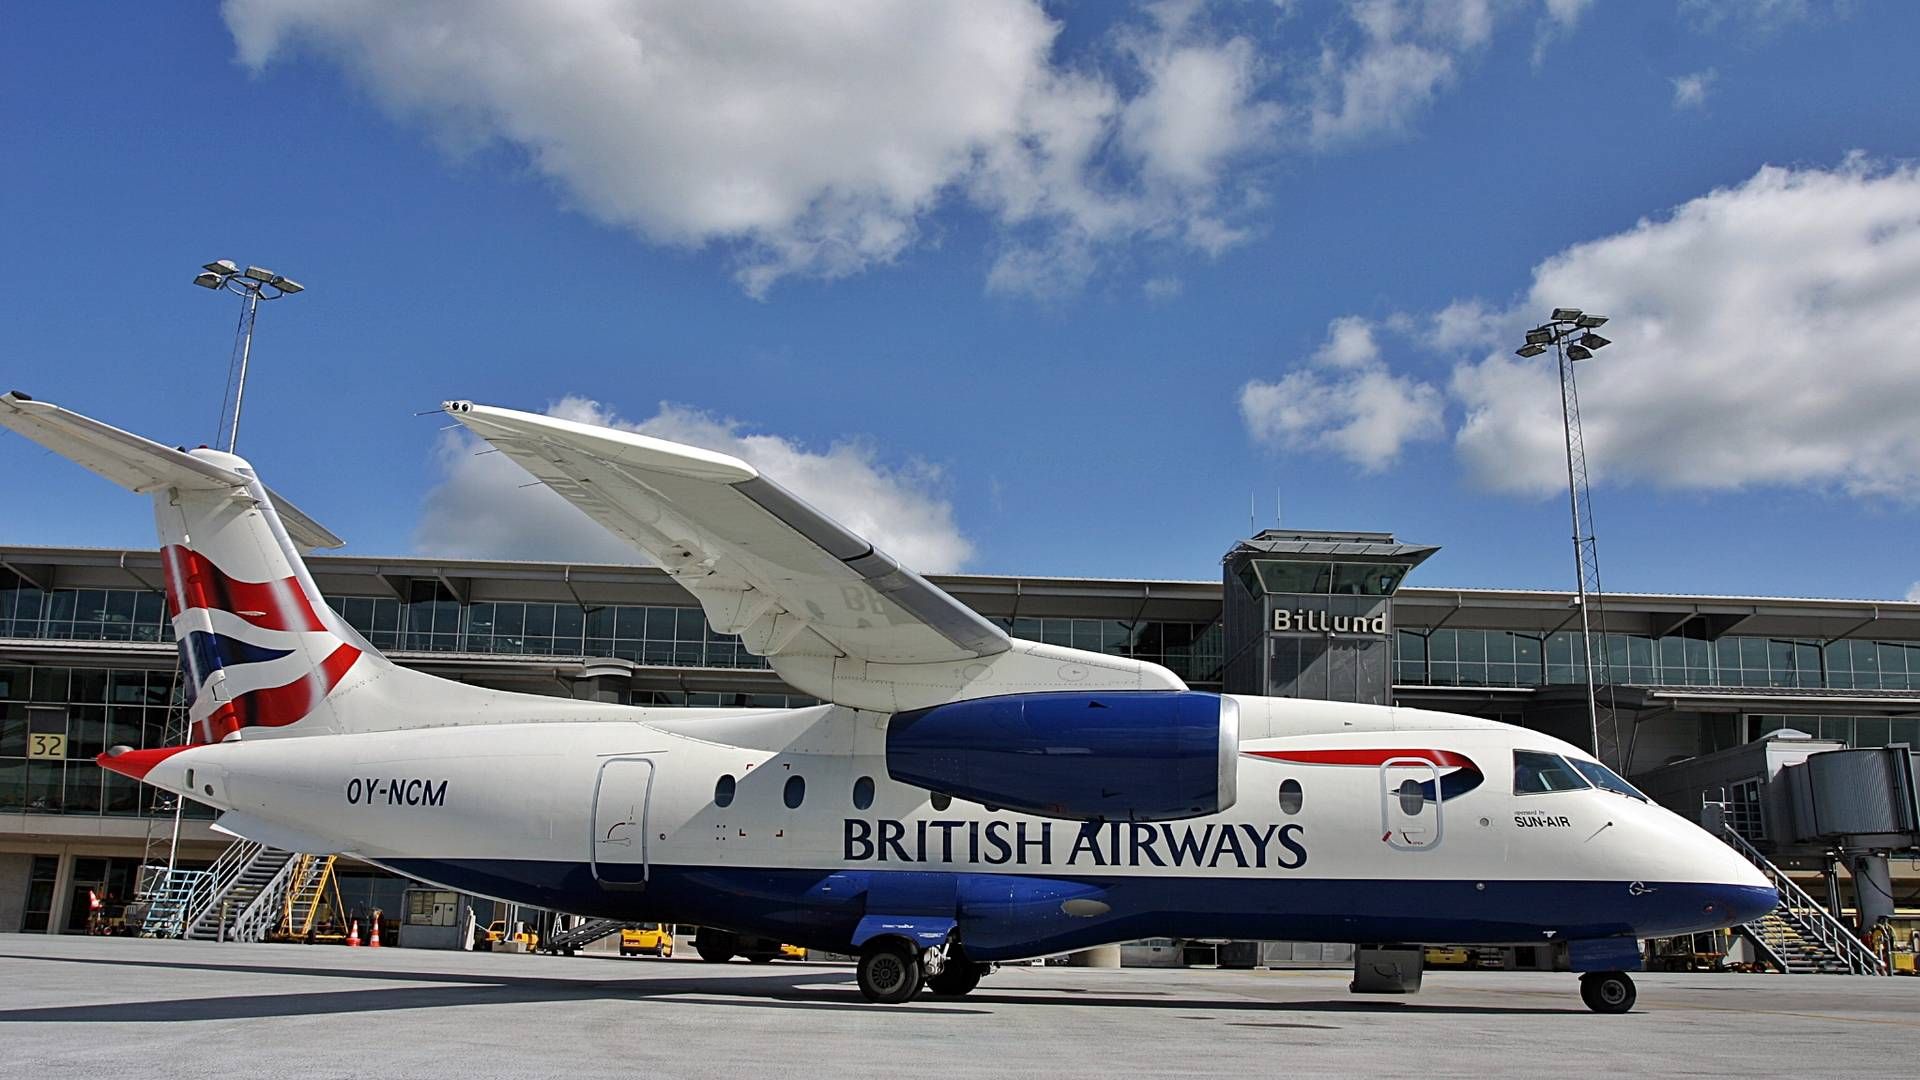 Sun-Airs ruteflyvning foregår under British Airways’ brand som franchise partner | Foto: SUN-AIR Aviation Group Holding A/S/PR